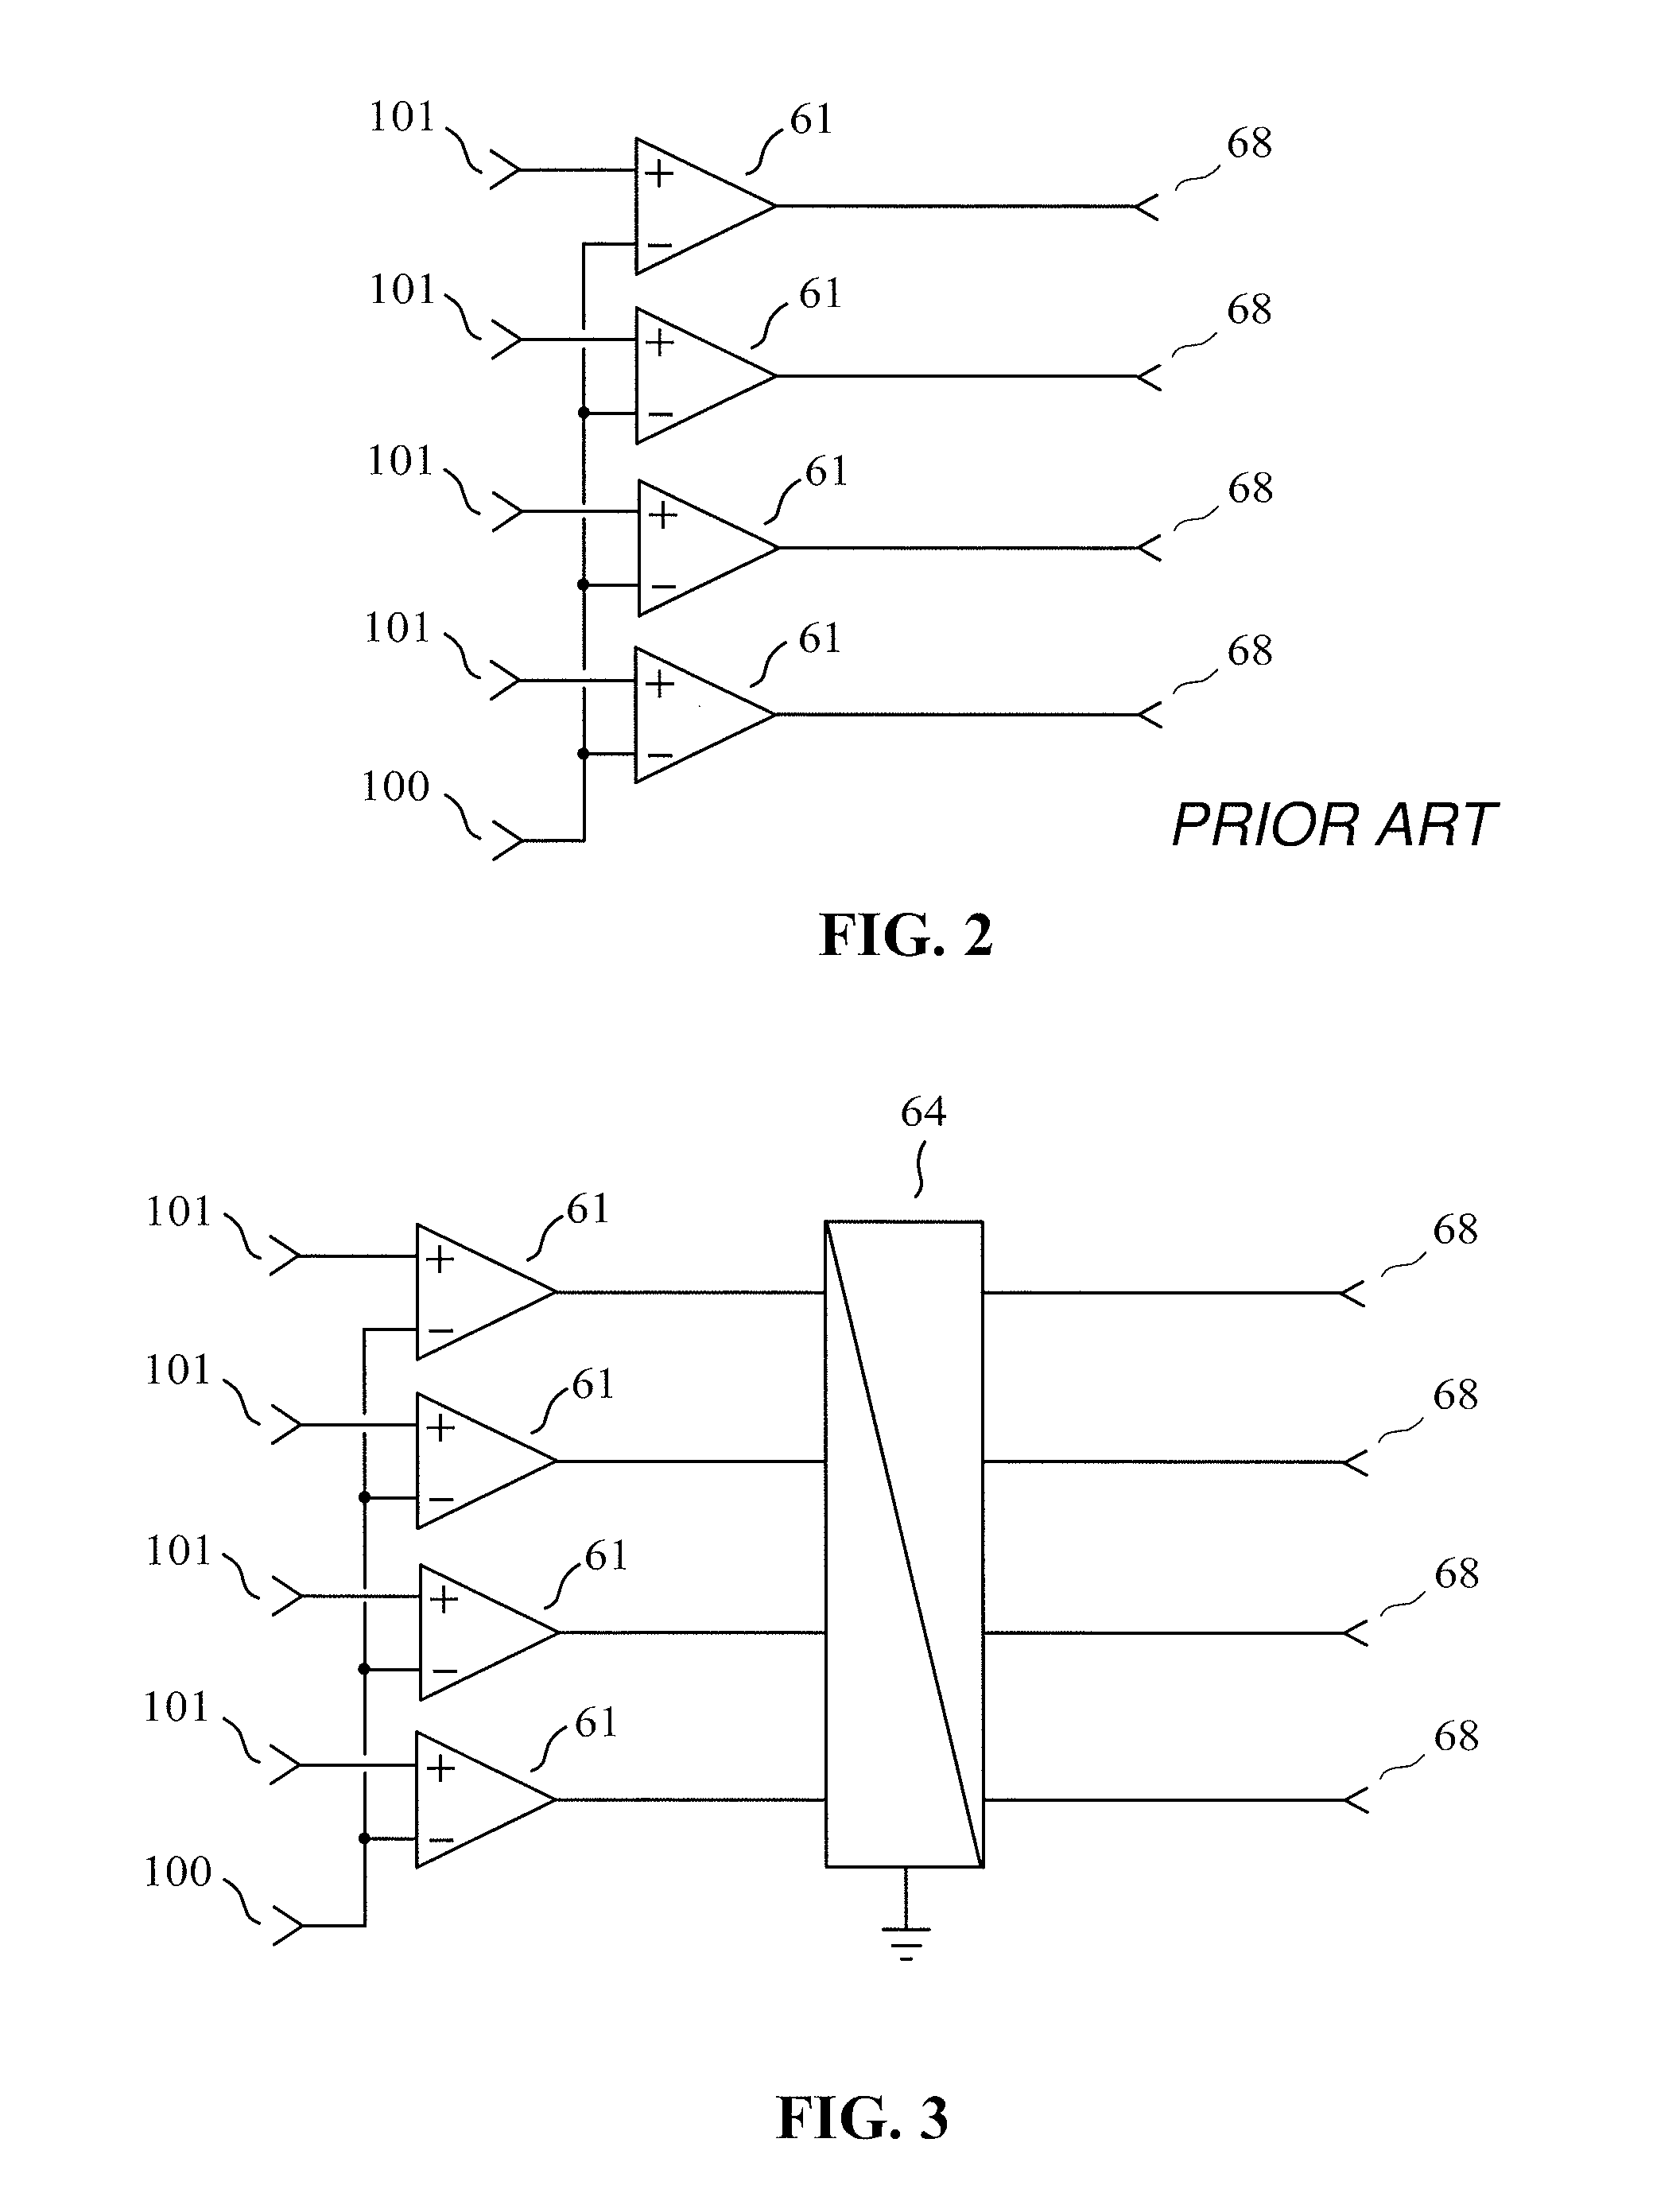 Pseudo-differential receiving circuit